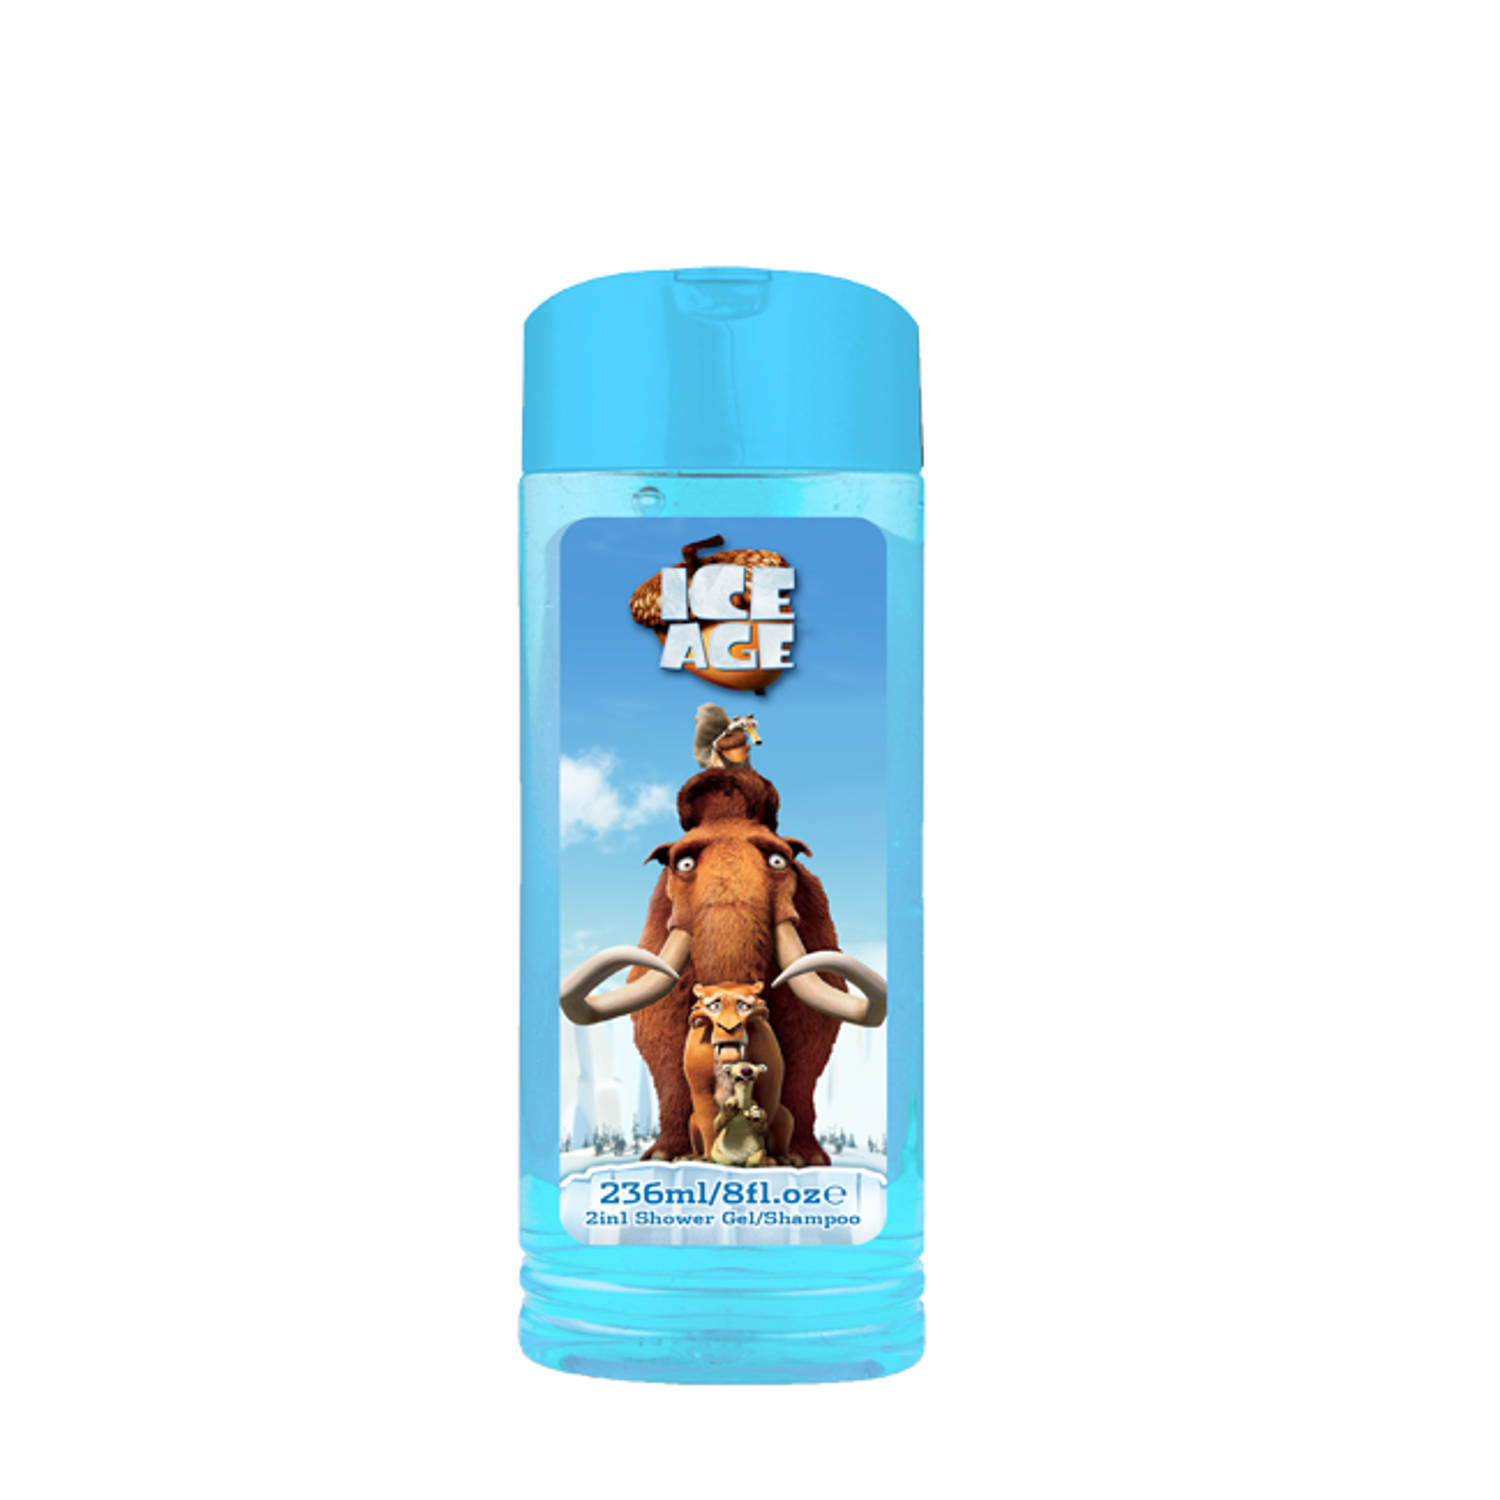 Fox - Ice Age 2 in 1 douchegel / shampoo - 236ml